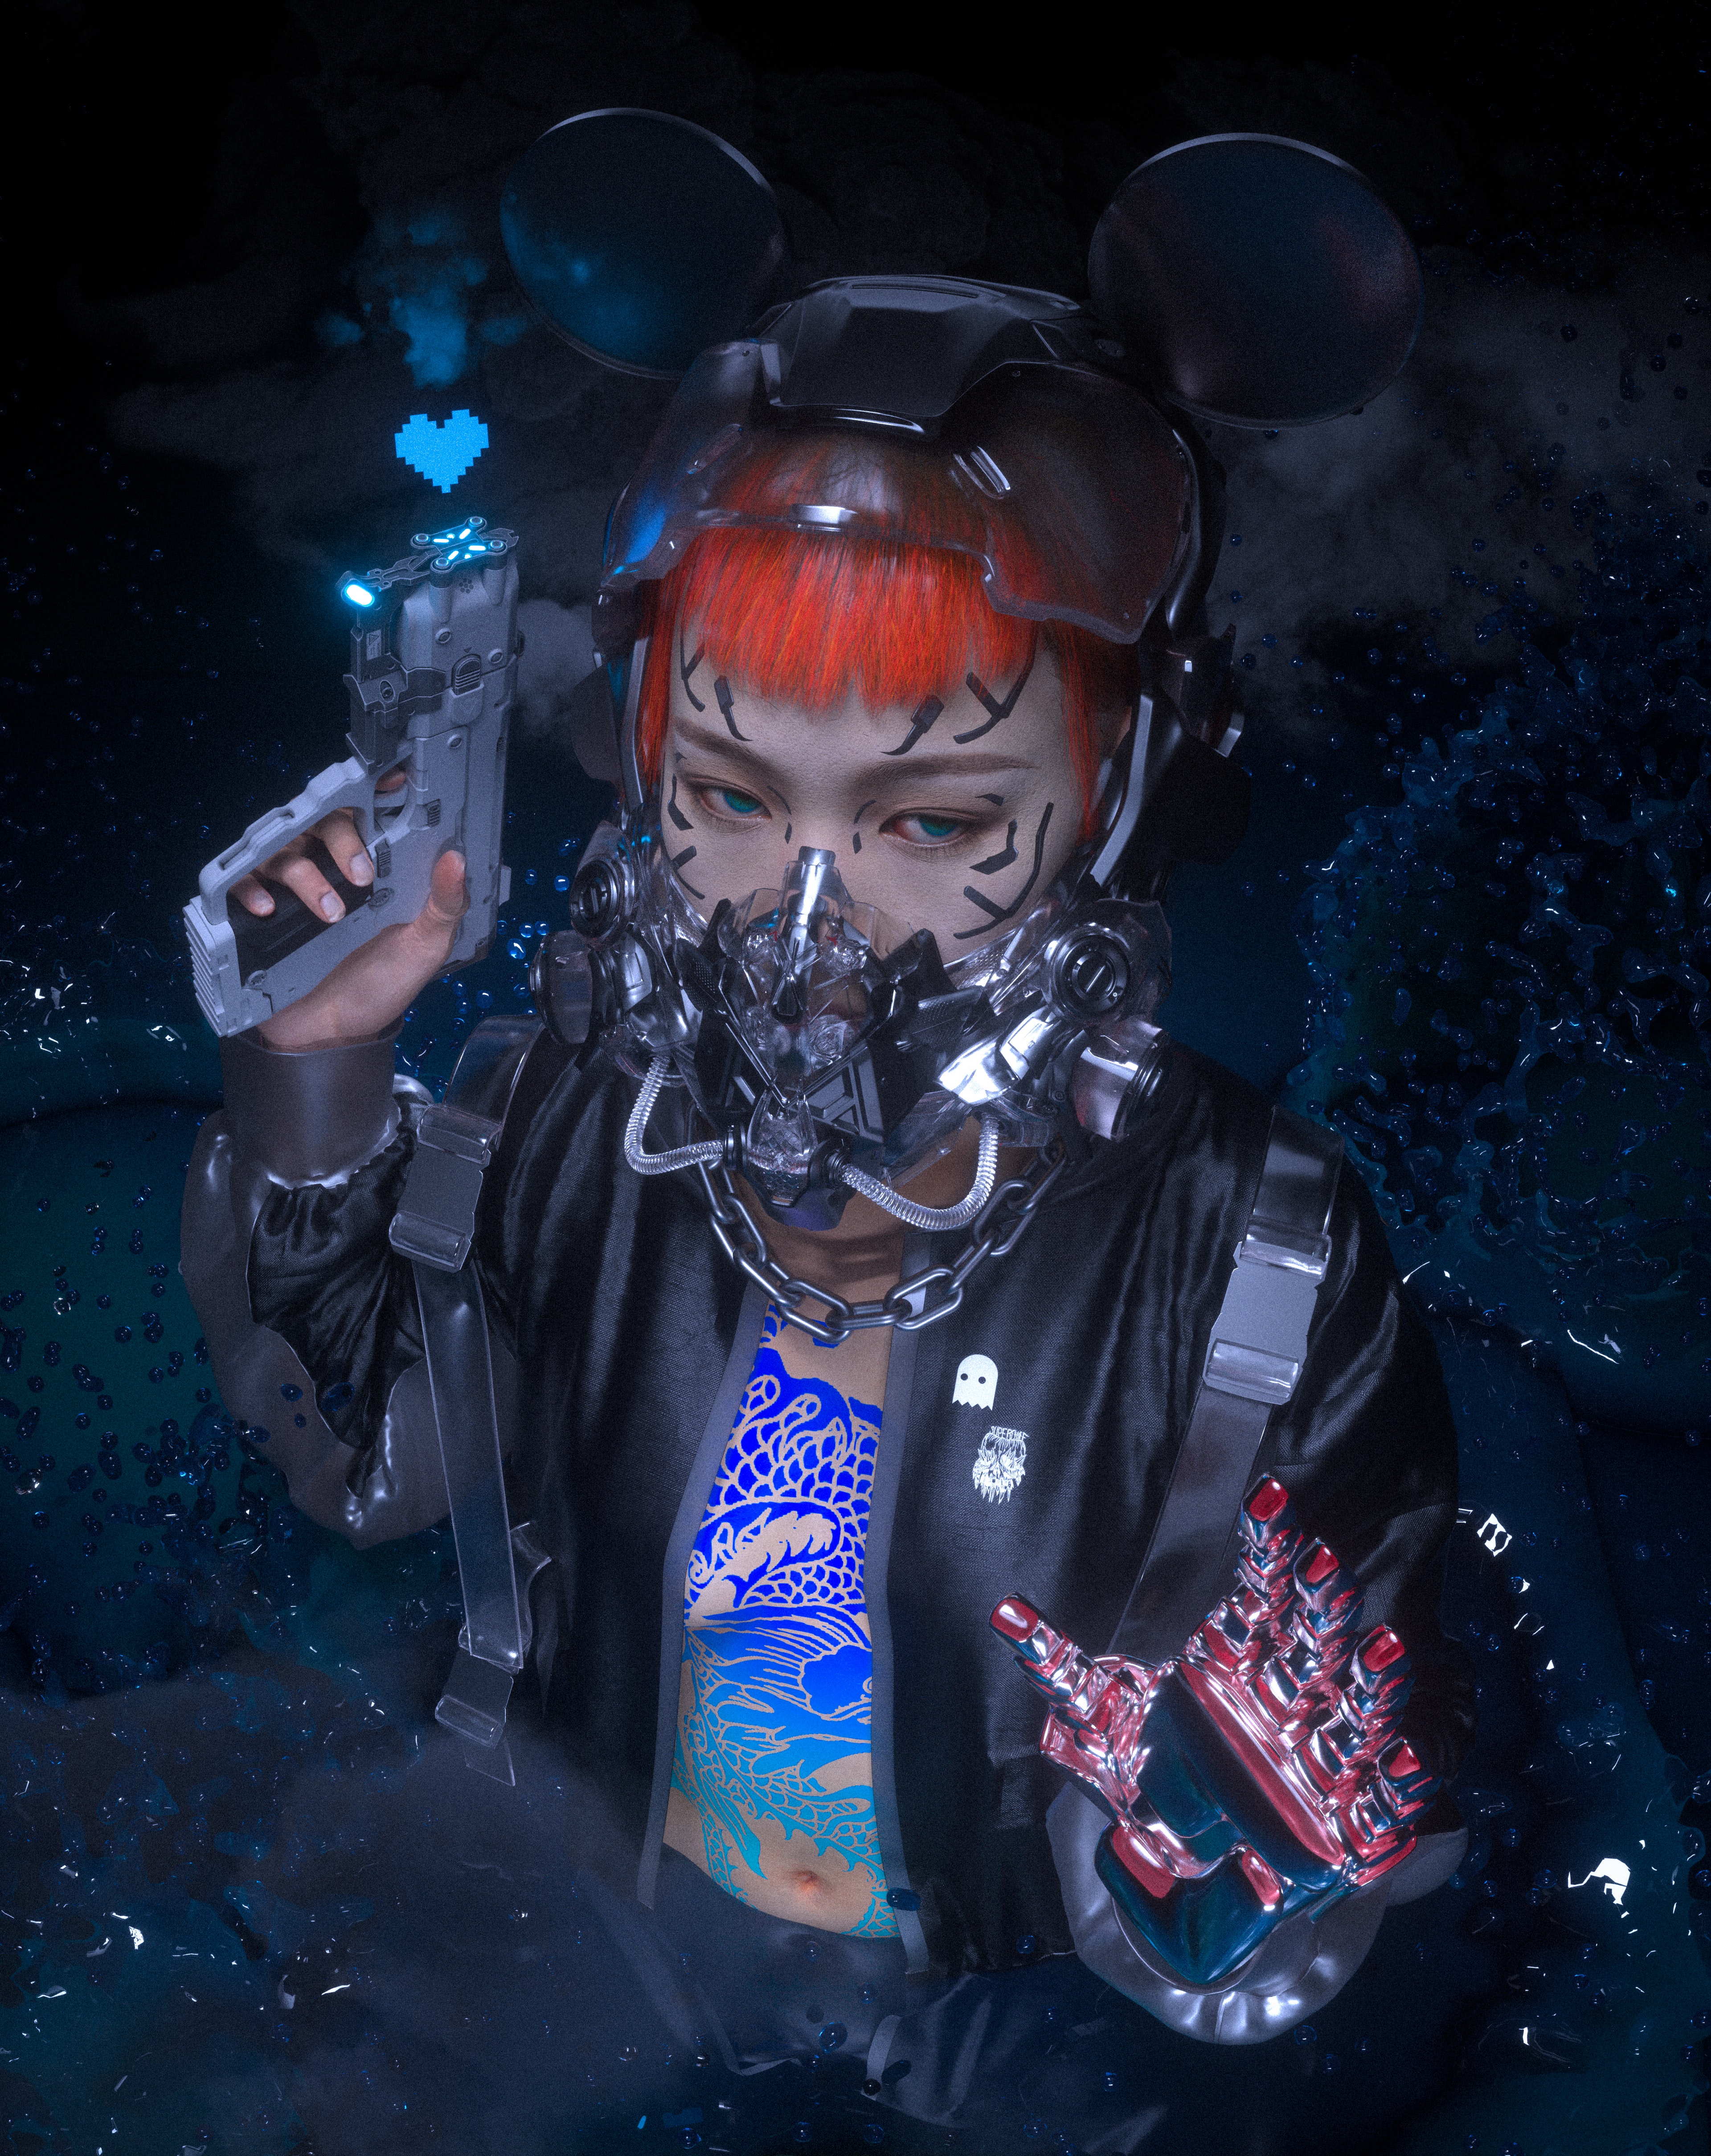 General 3840x4840 character design  portrait Asian women digital art CGI artwork redhead futuristic cyberpunk mouse ears gas masks mask gun girls with guns